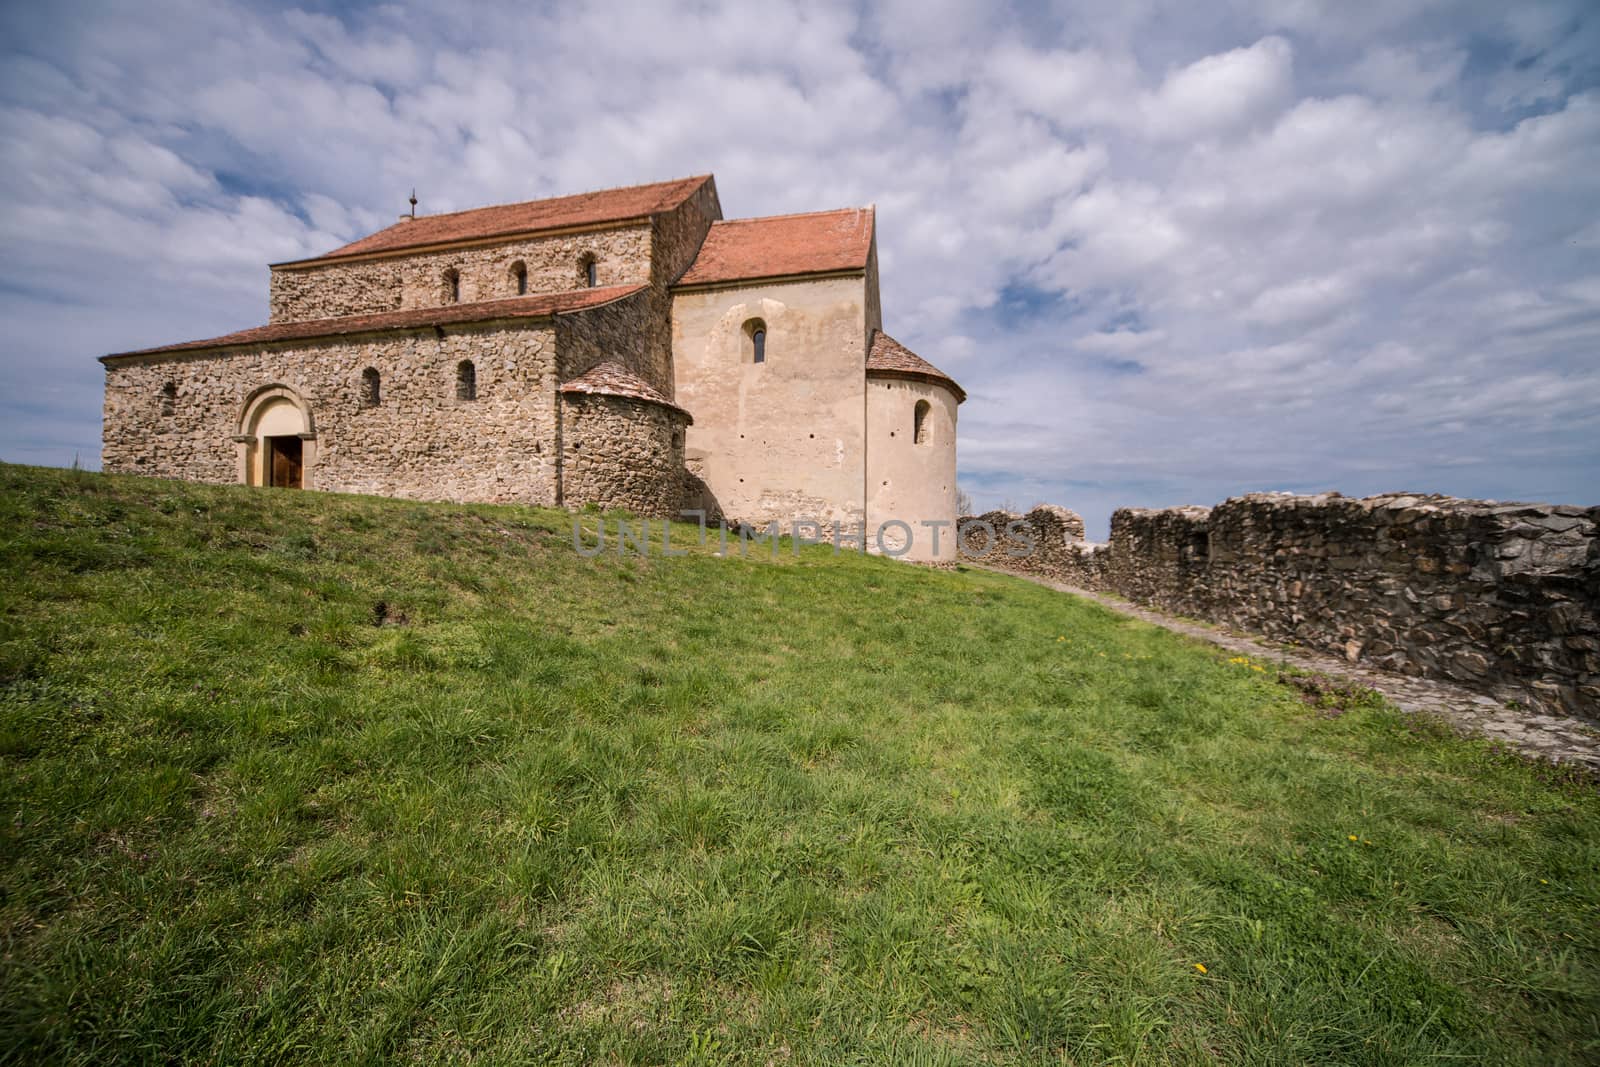 Fortified Church in Cisnadioara, near Sibiu.